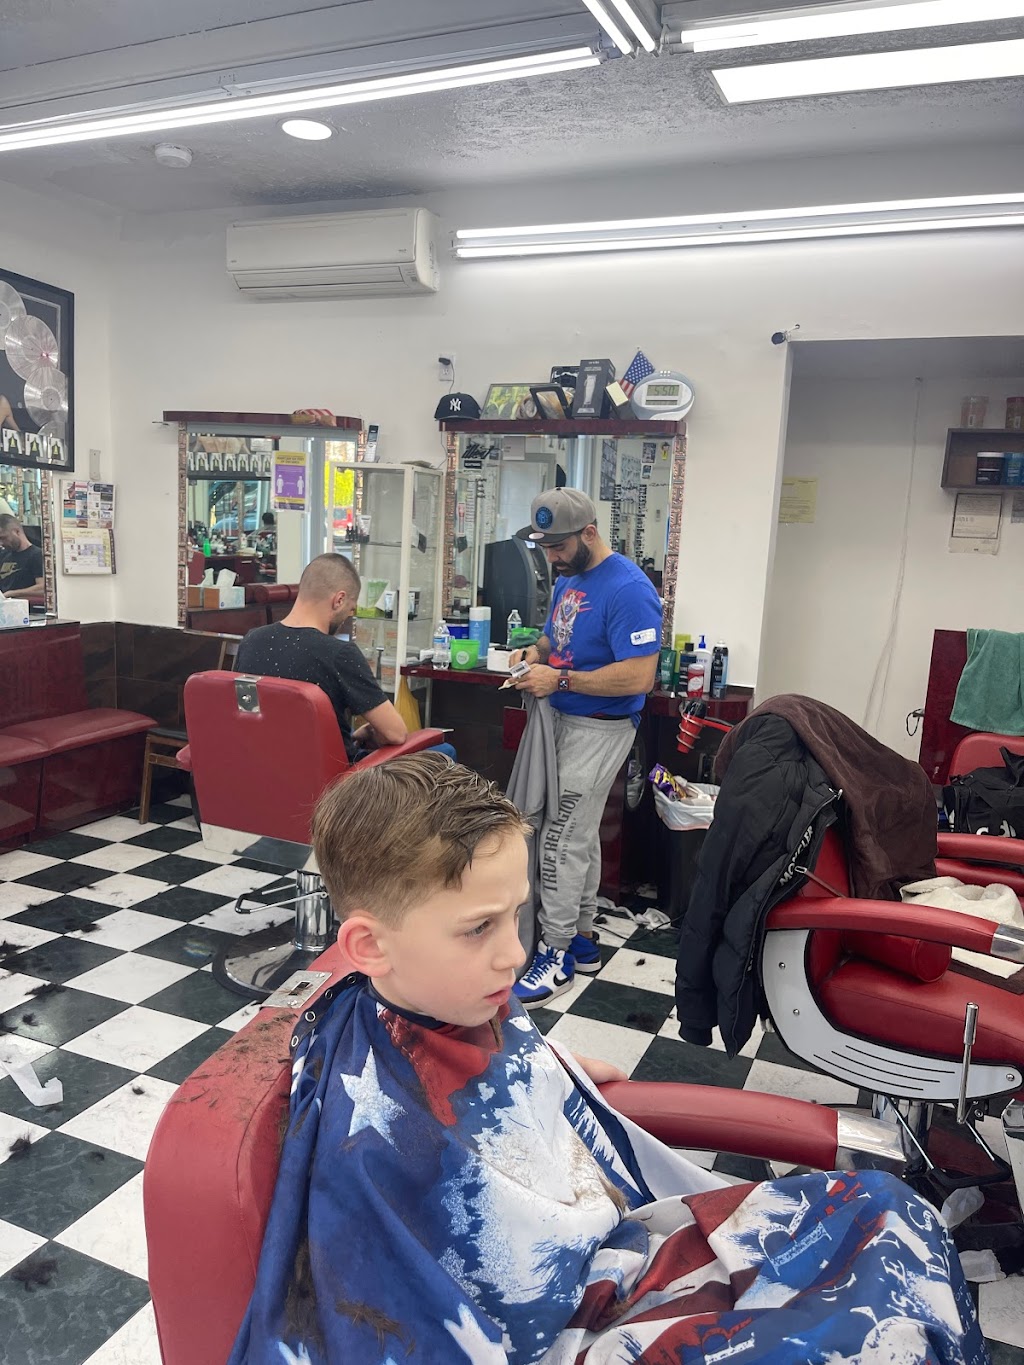 City Cuts barber shop | 8518 25th Ave, Brooklyn, NY 11214, USA | Phone: (718) 333-2323